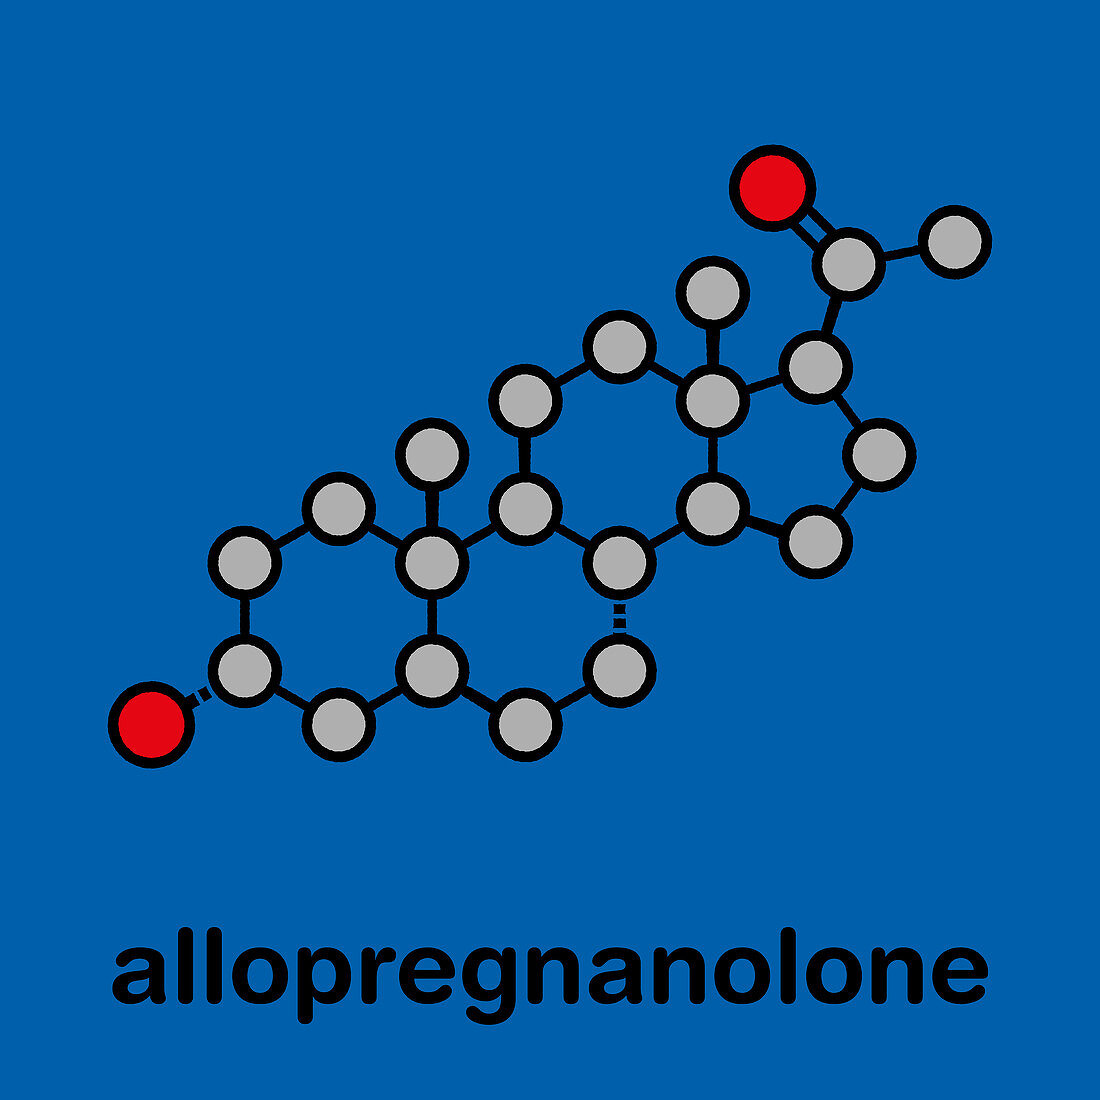 Allopregnanolone drug molecule, illustration